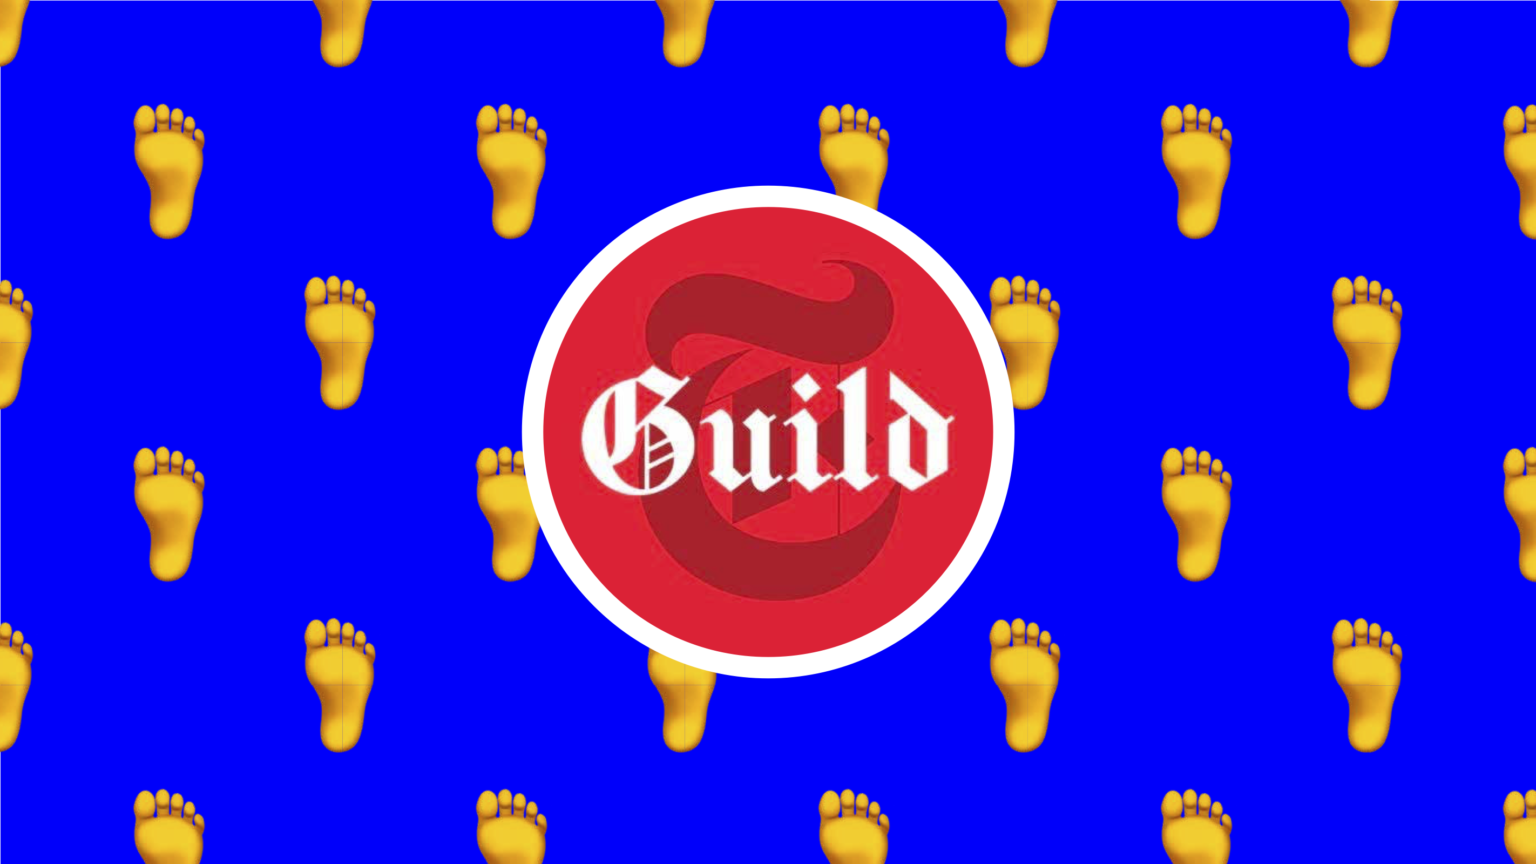 NYT Tech Guild Logo with Feet Emoji Pattern